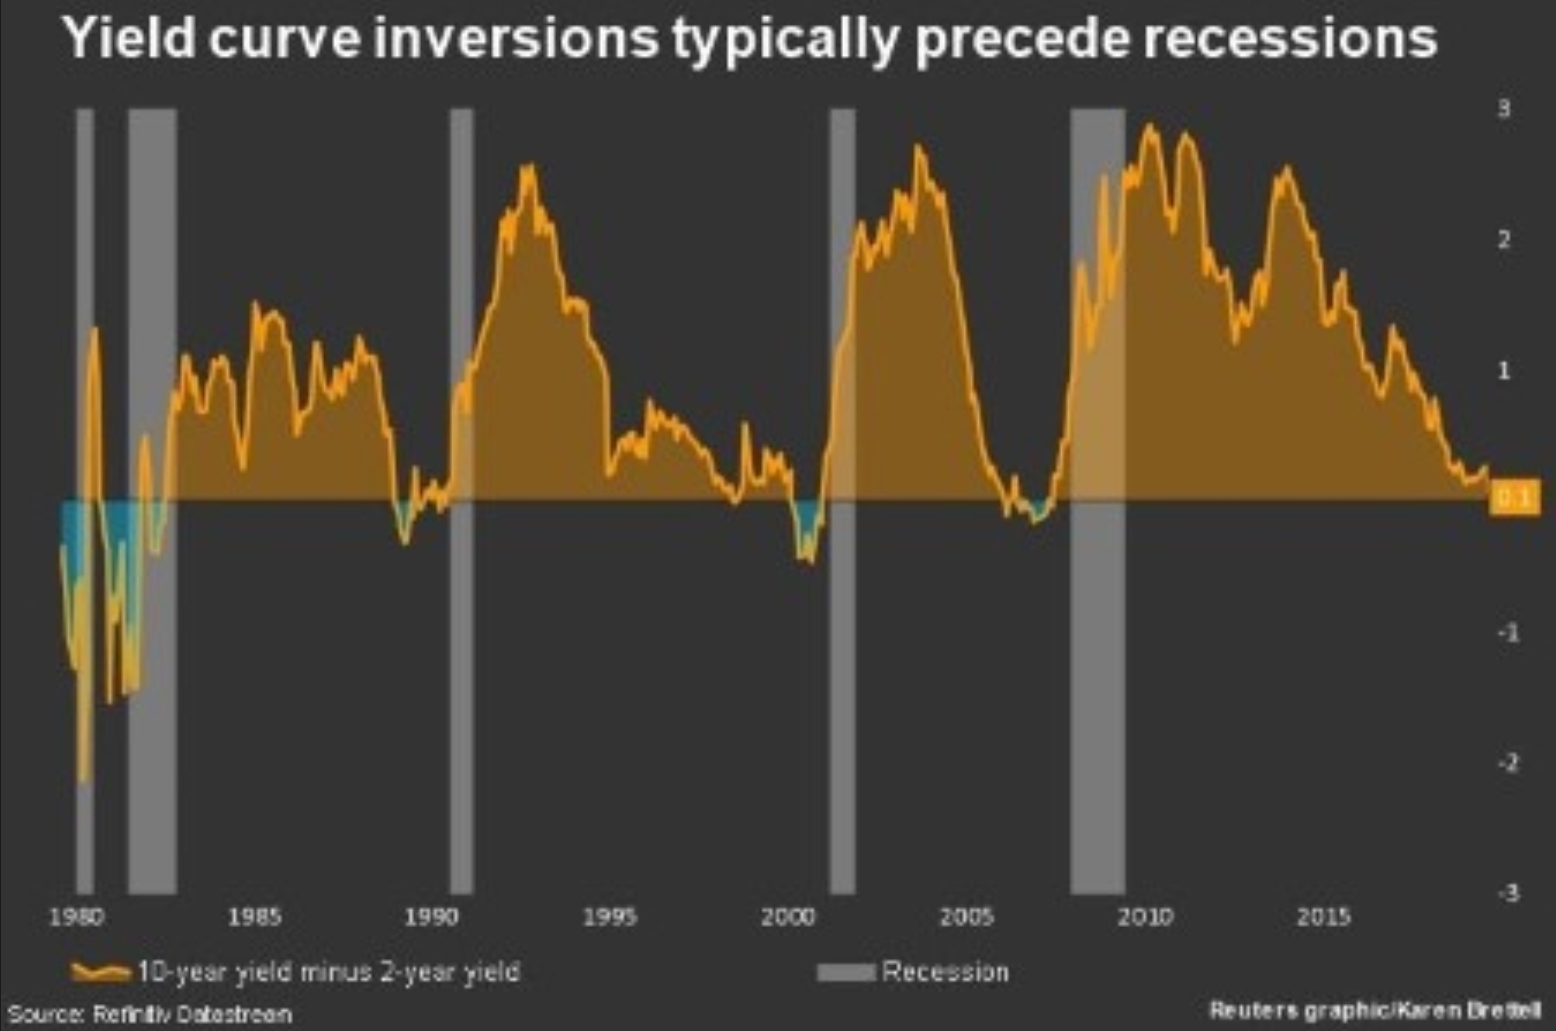 La curva del bono estadounidense se invierte de nuevo 4